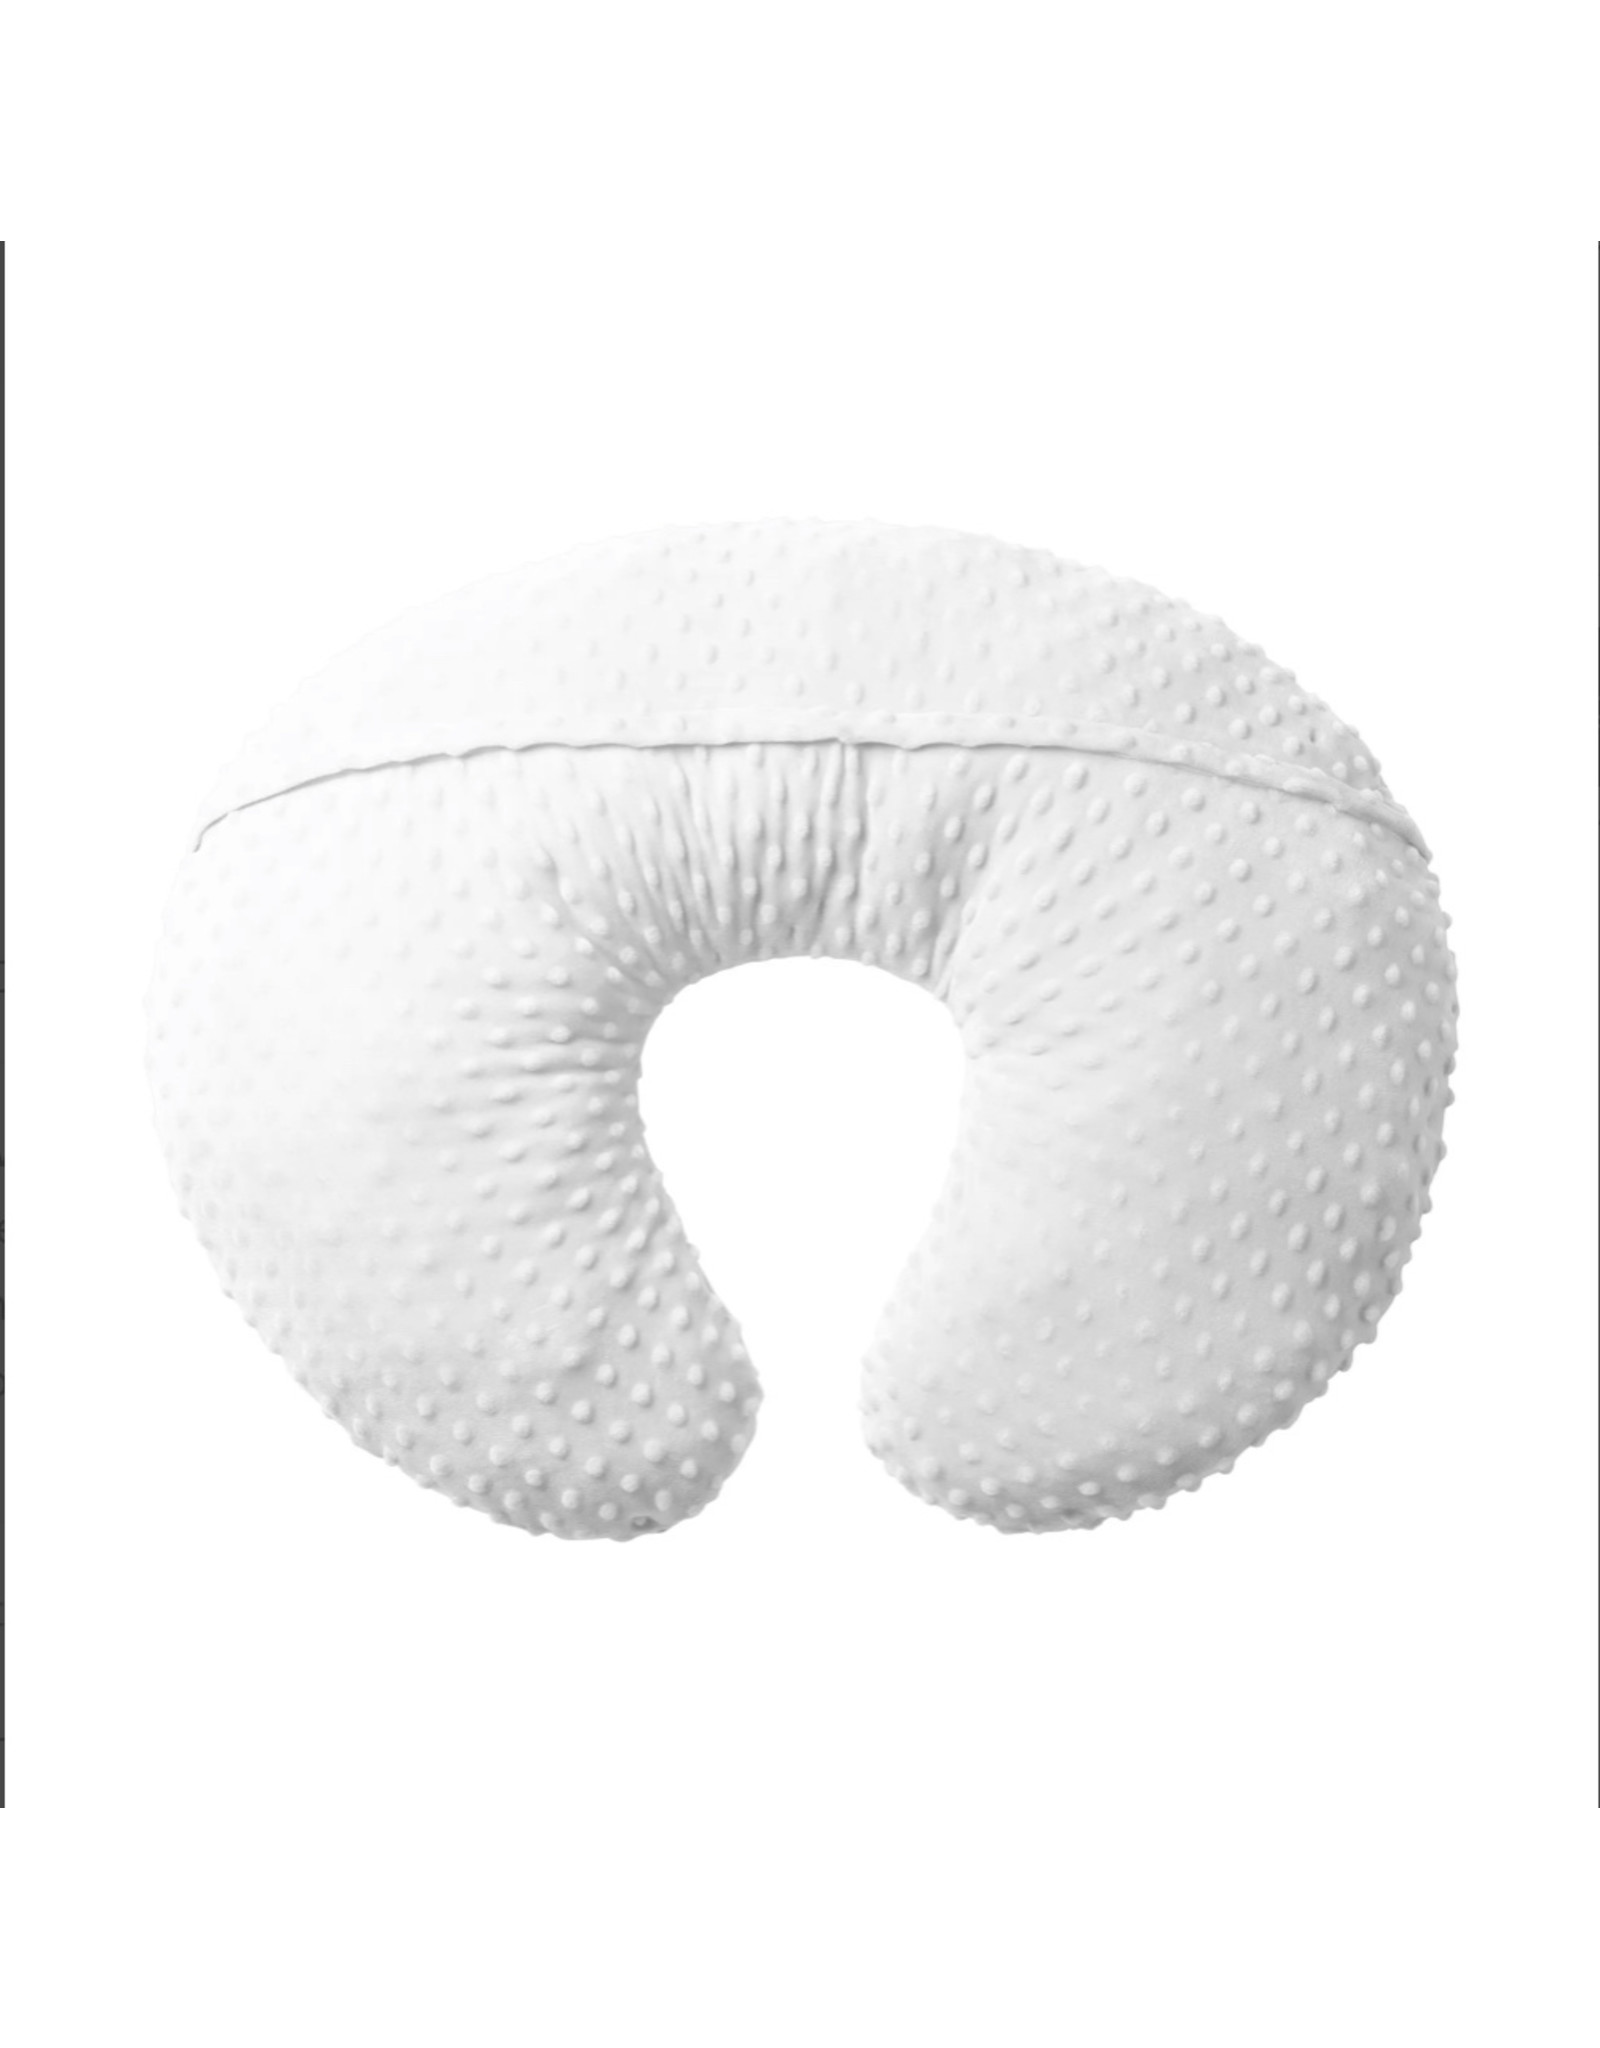 JLIKA, Nursing Pillow Cover, 100% Cotton, Little Man